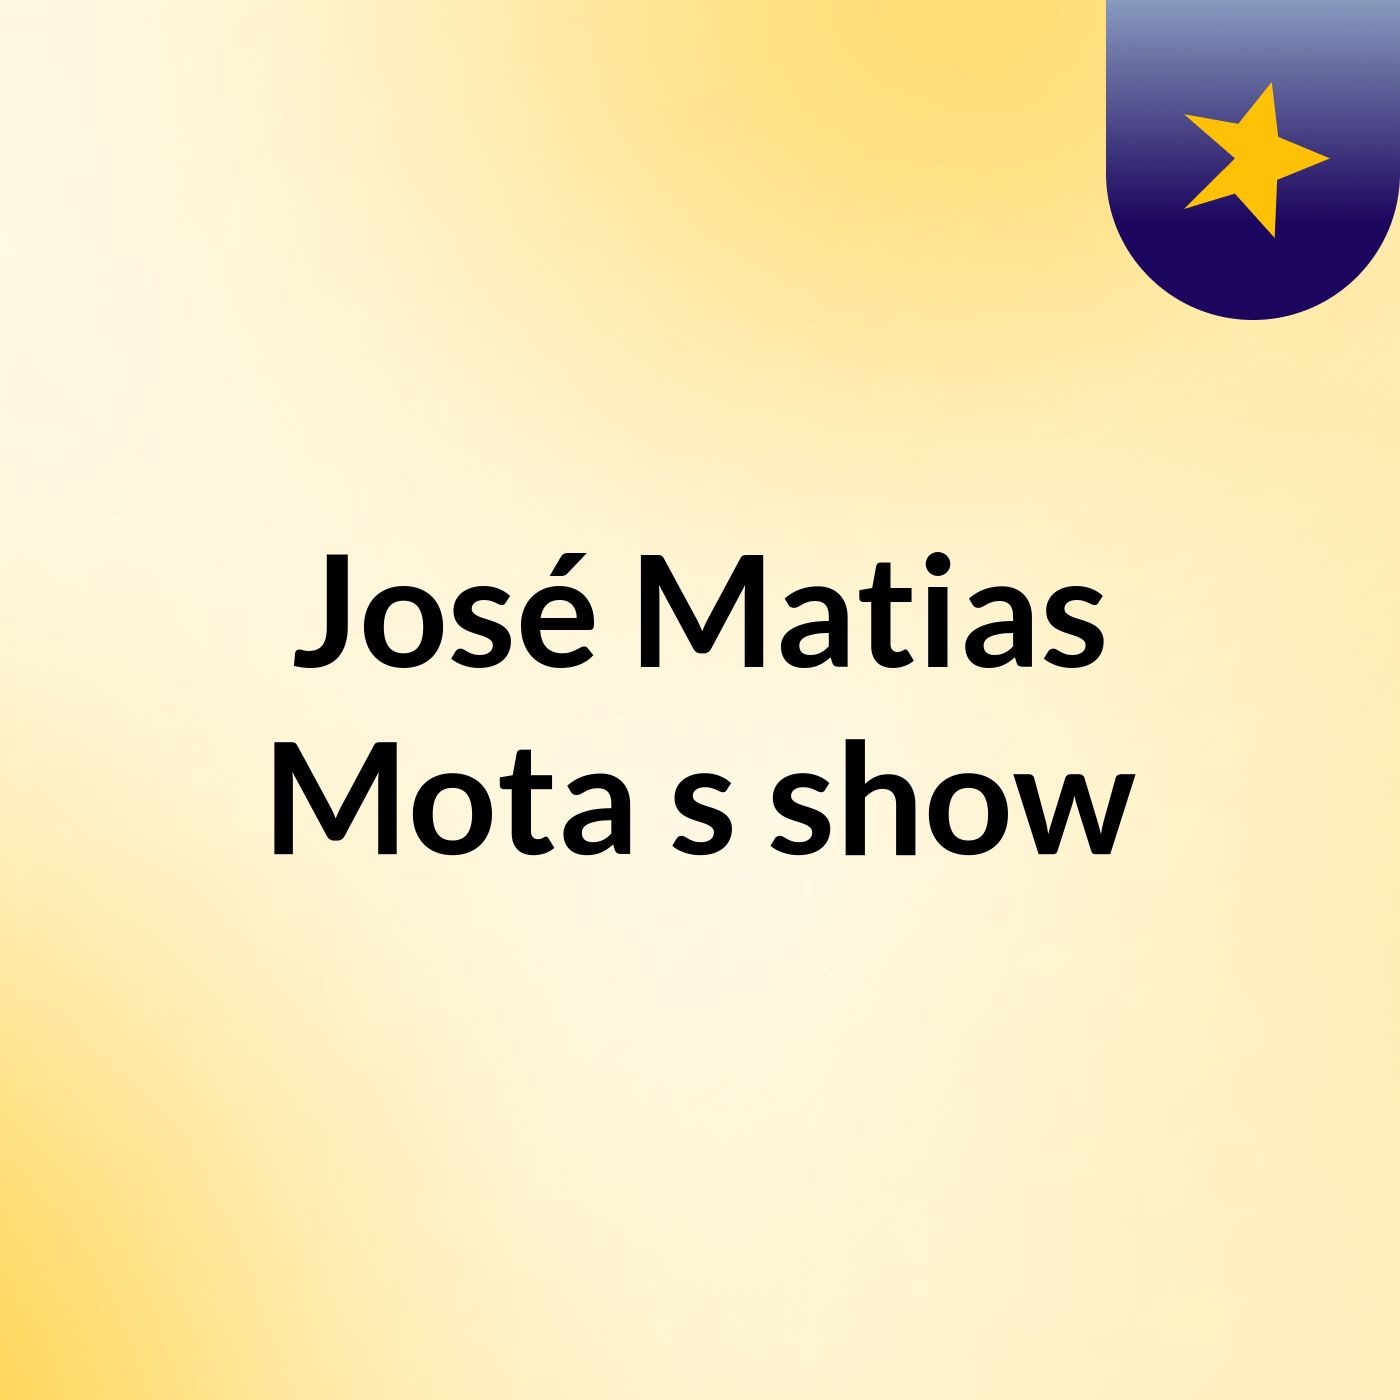 José Matias Mota's show